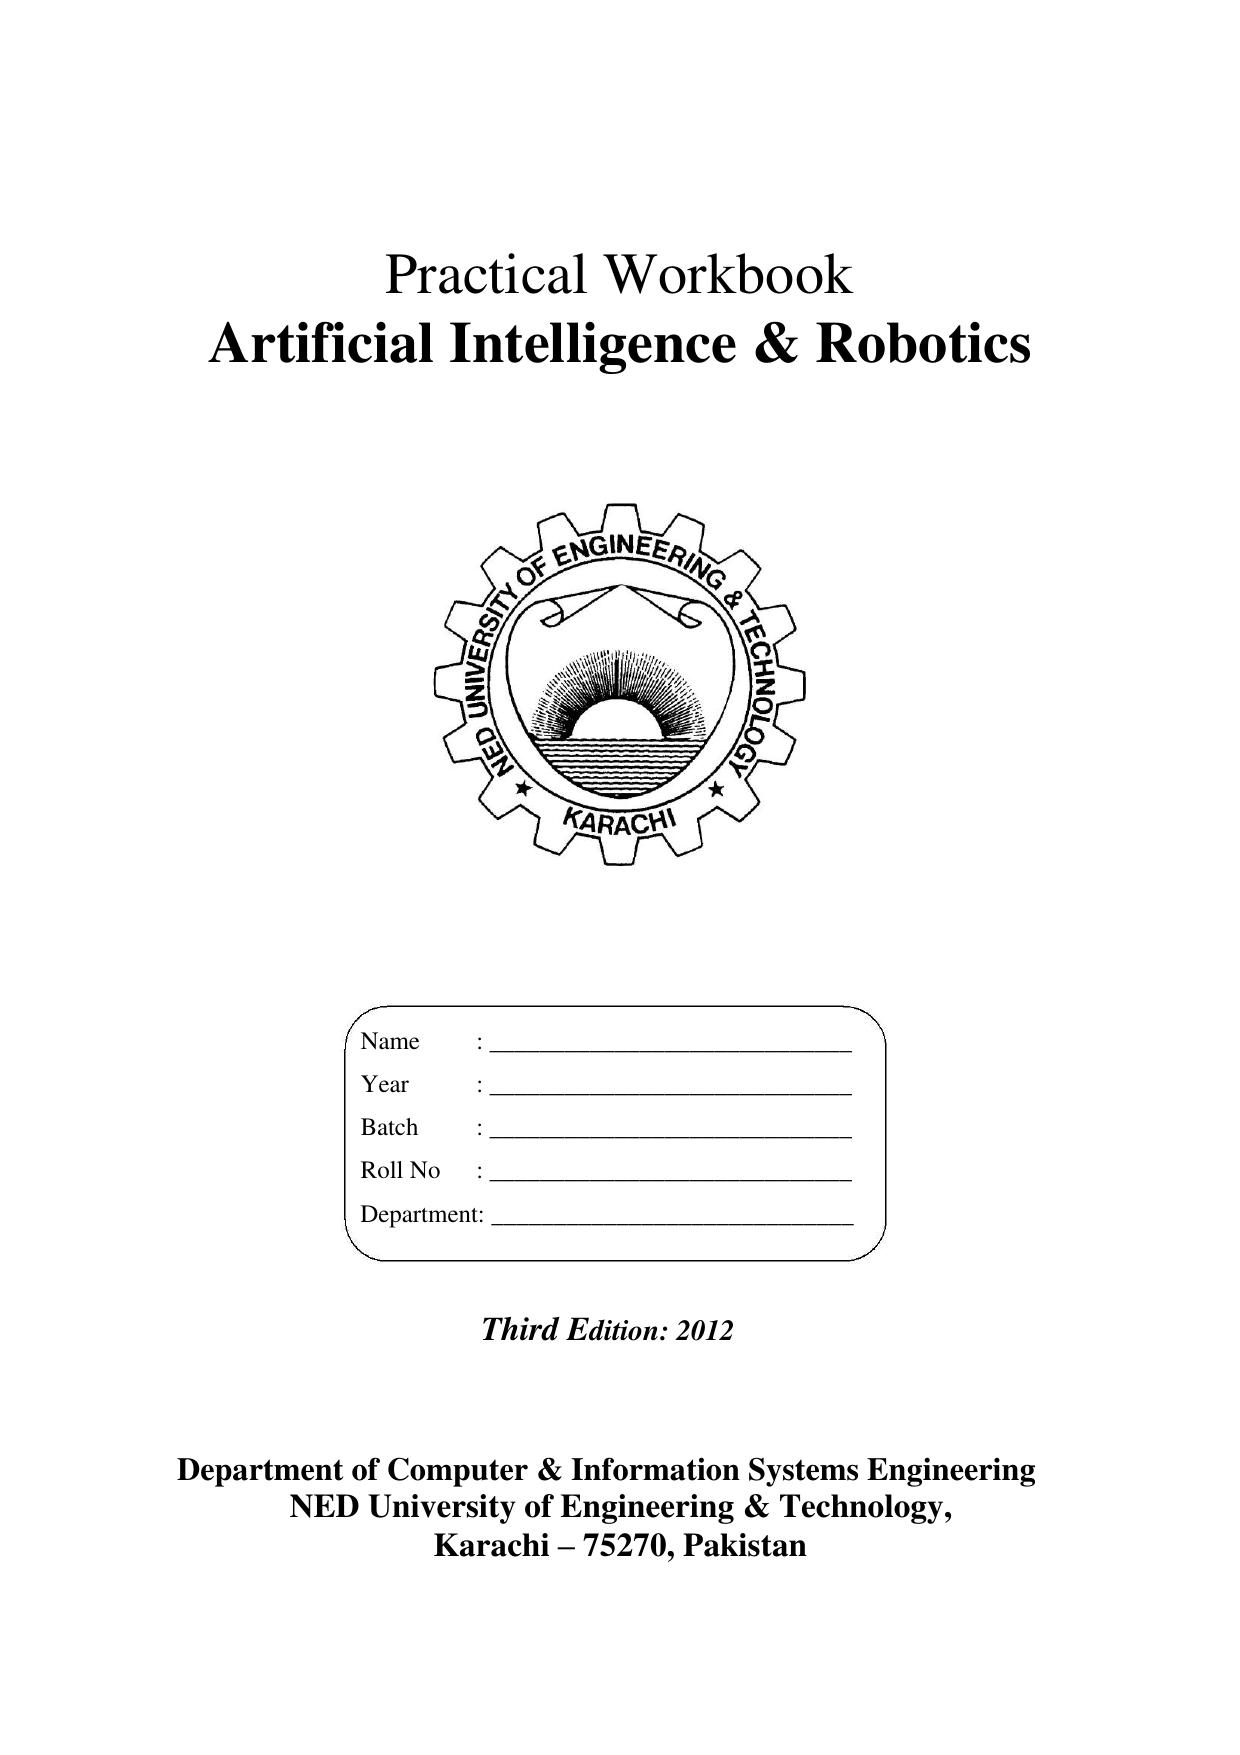 Practical Workbook Artificial Intelligence & Robotics 2013